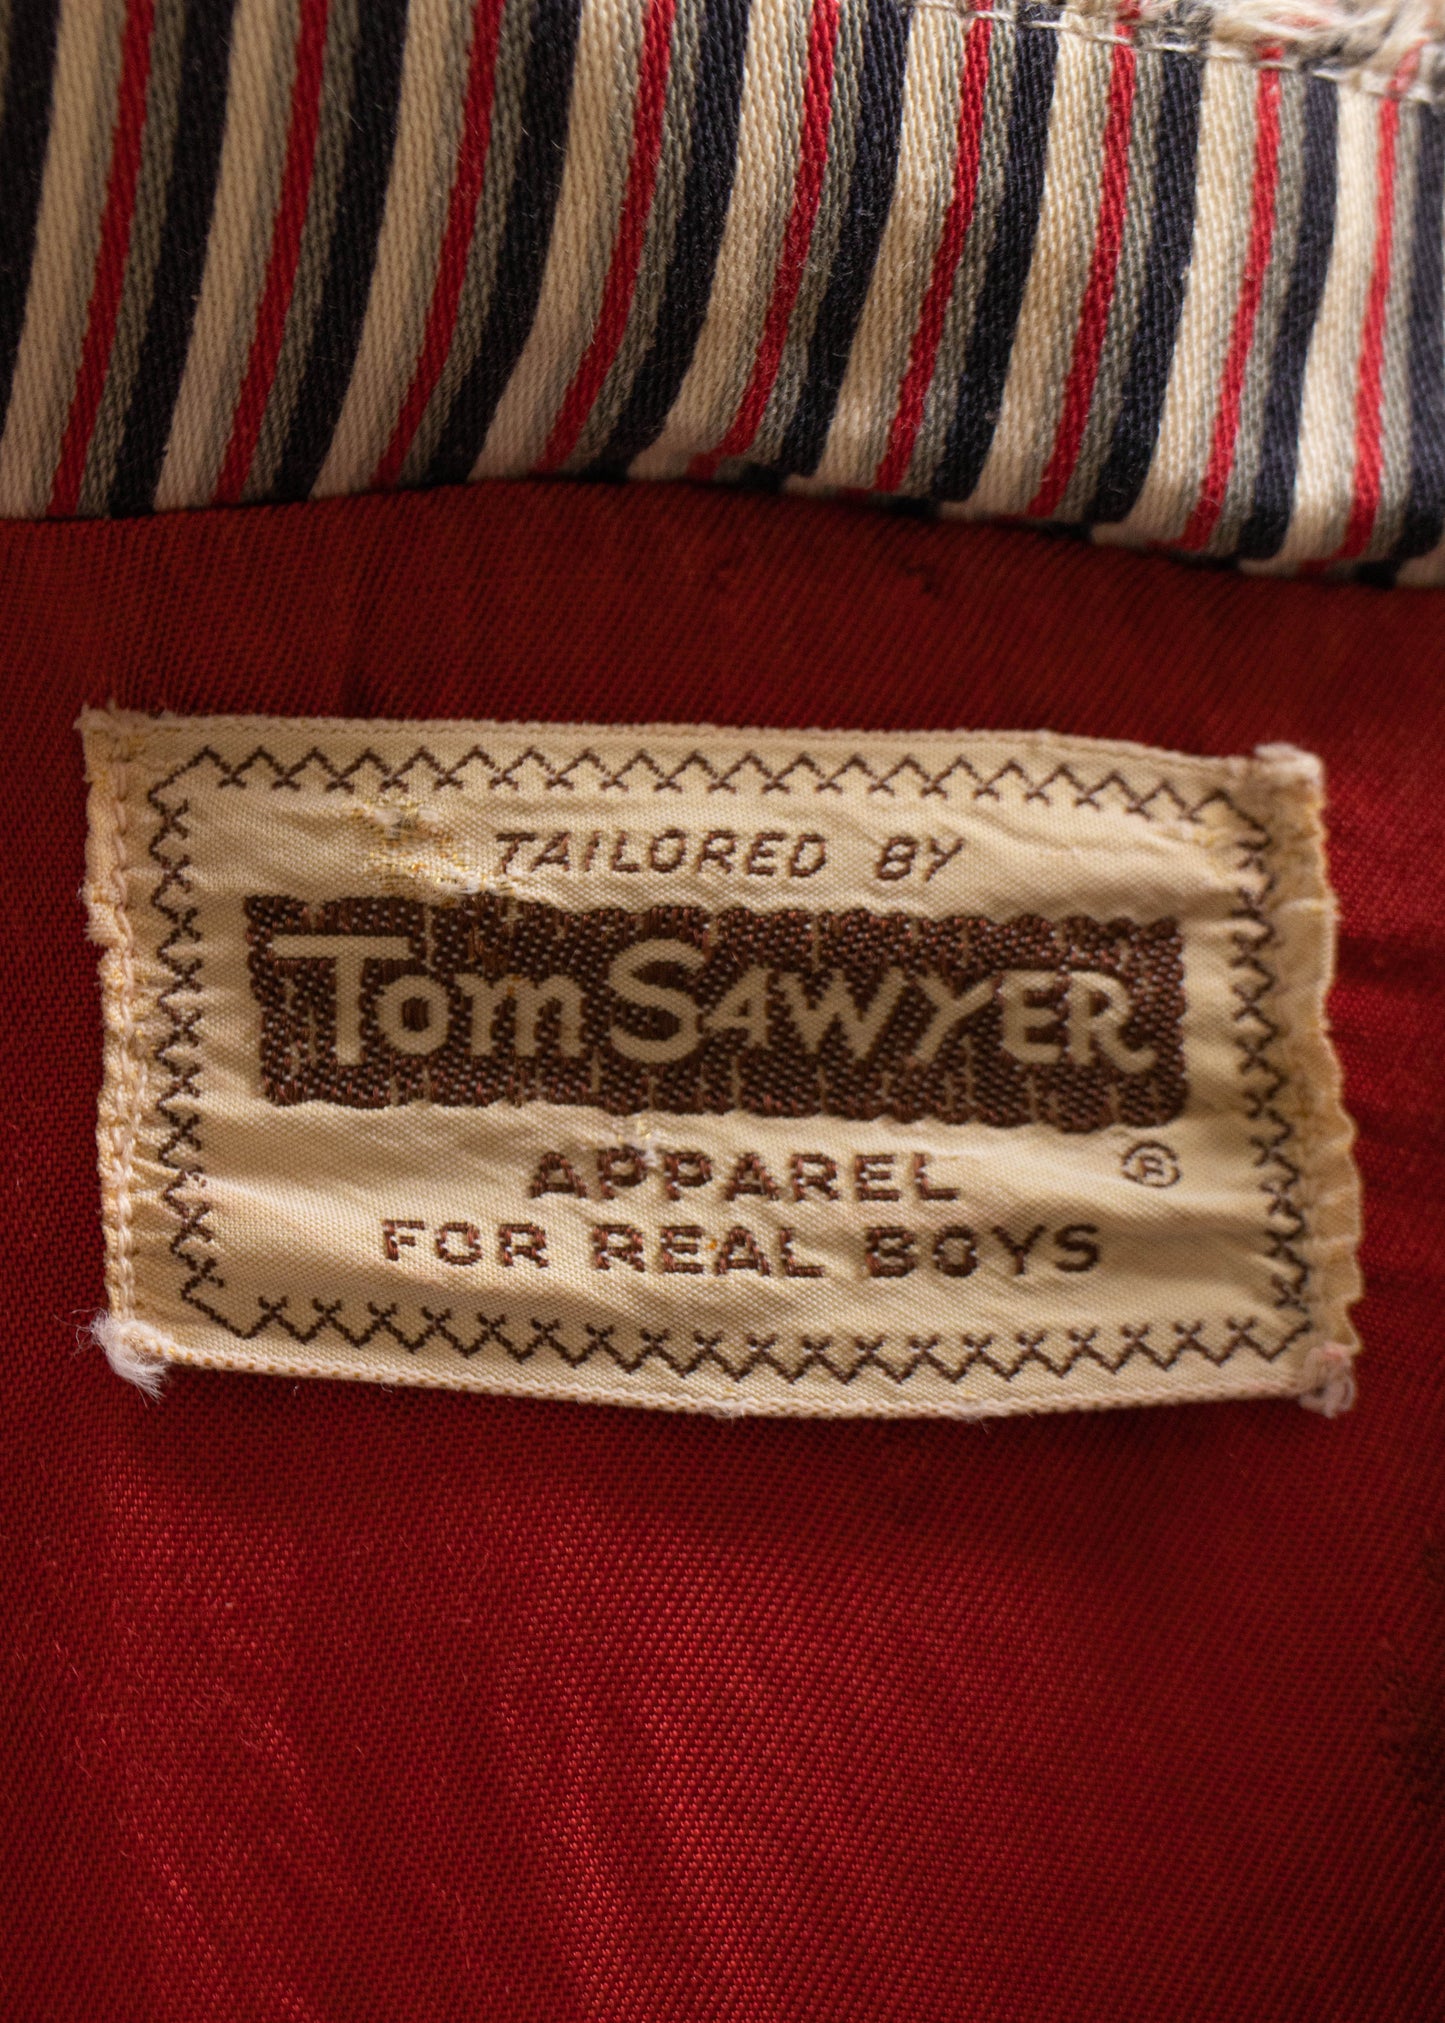 1940s Tom Sawyer Striped Pattern Zip Up Light Jacket Size 2XS/XS